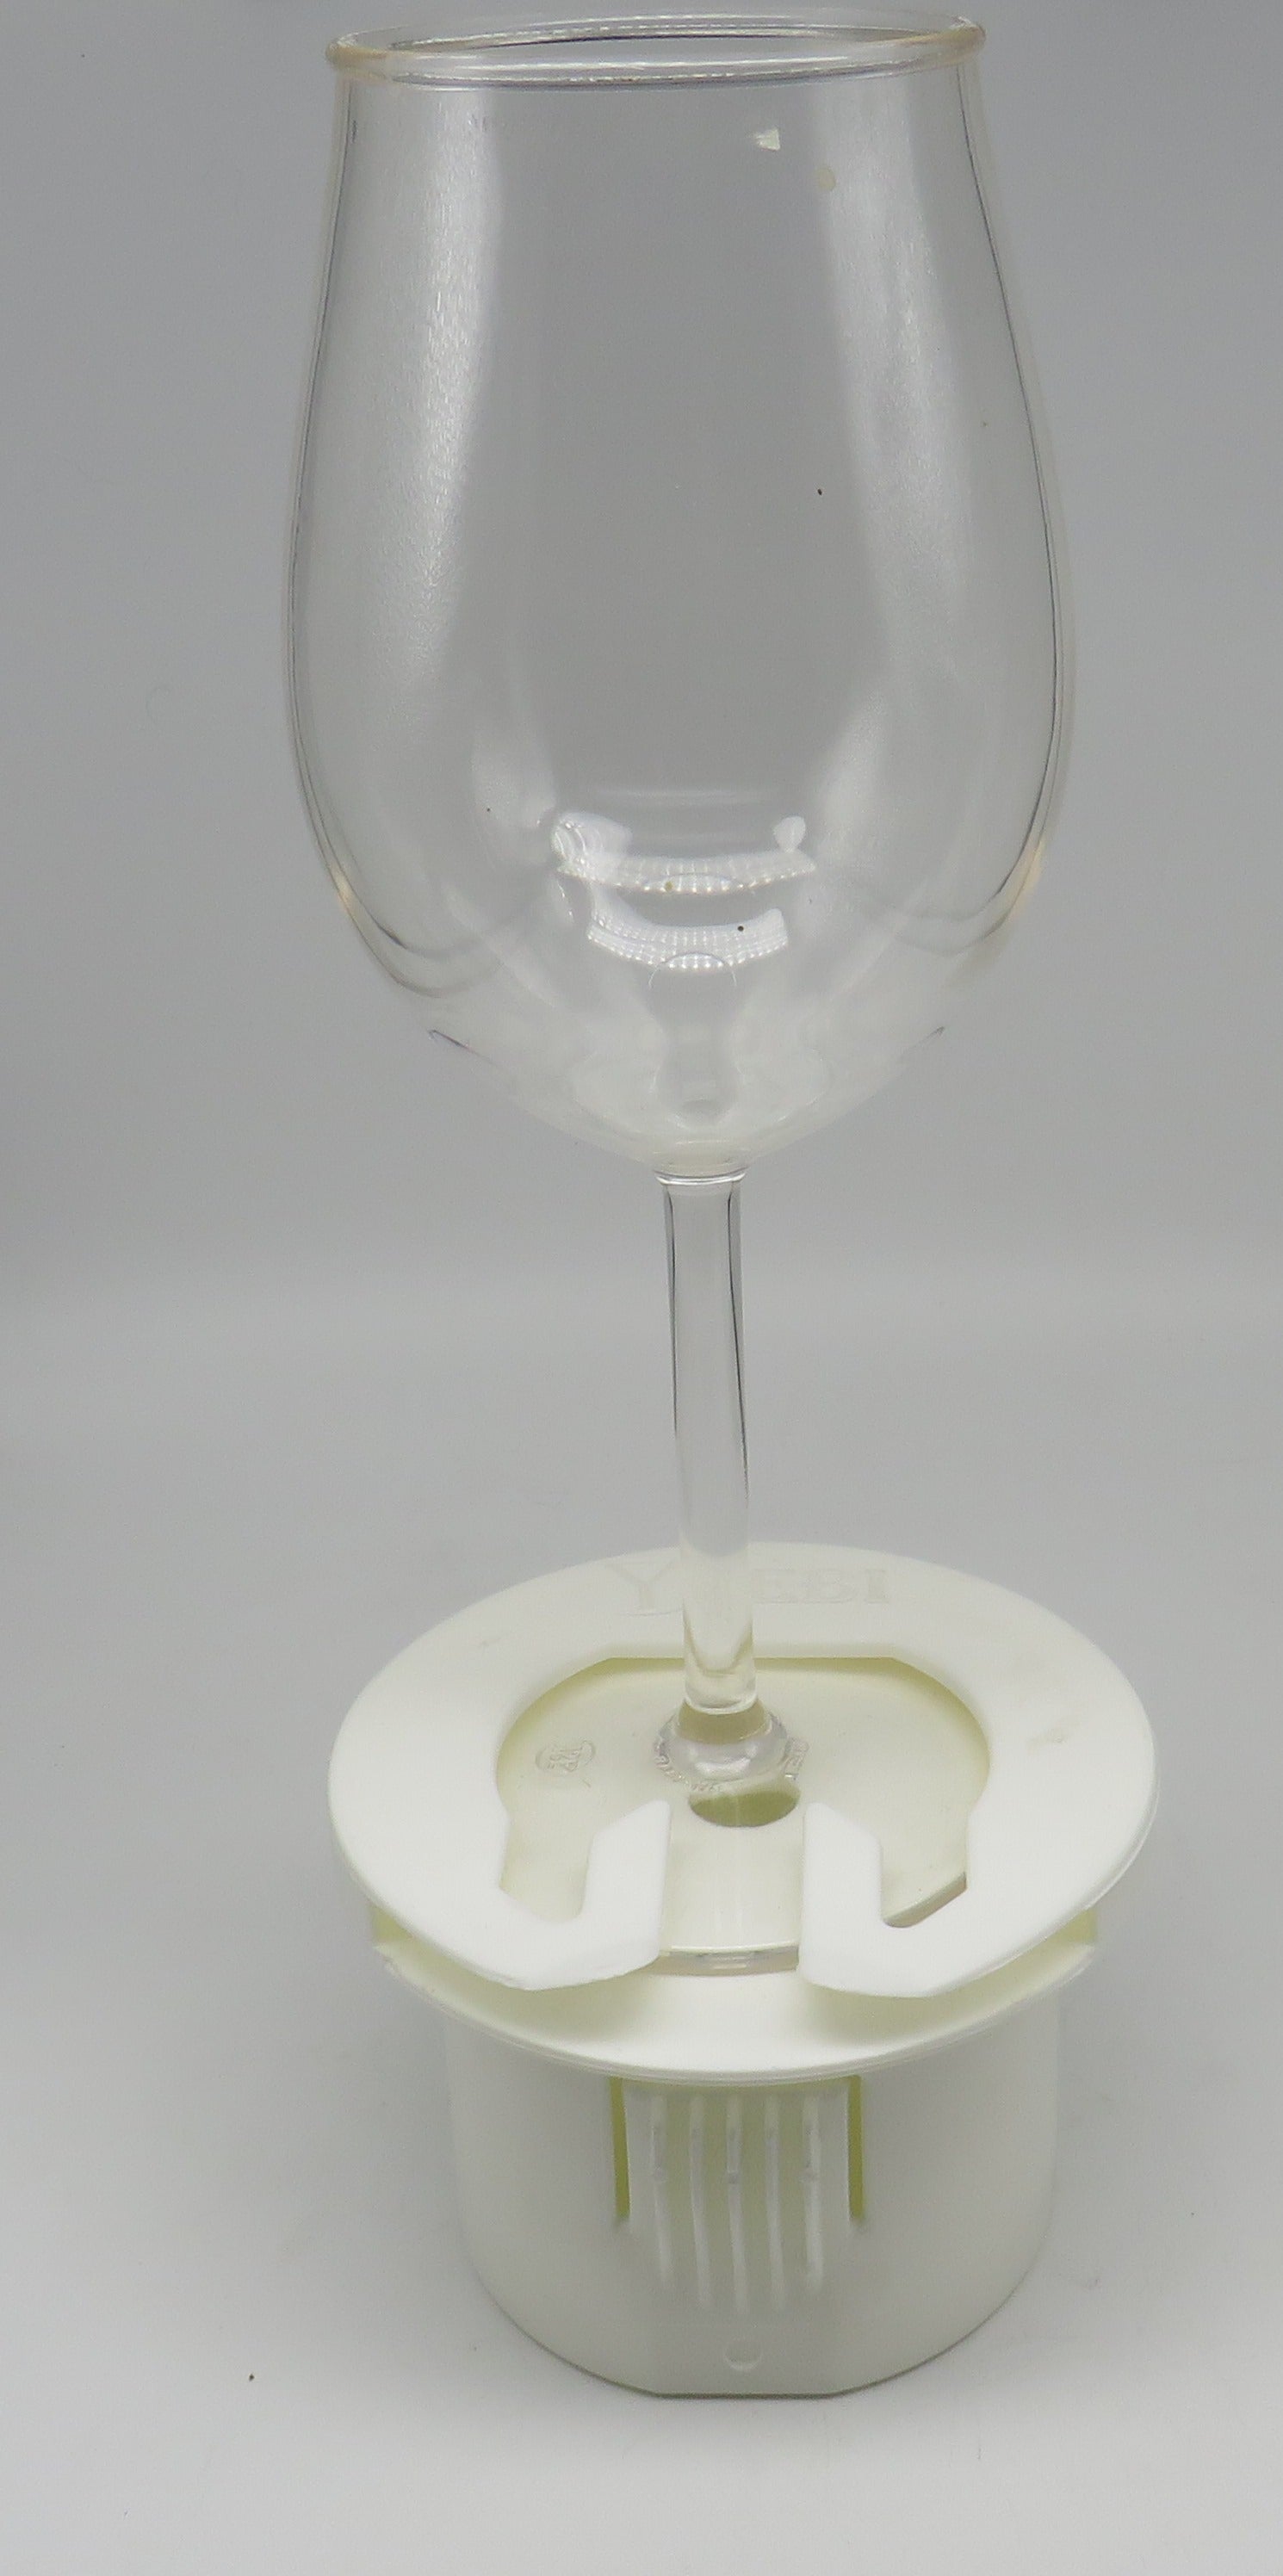 Yoebi White Stemware Cup holder (Non-Slide) For Wine Glasses